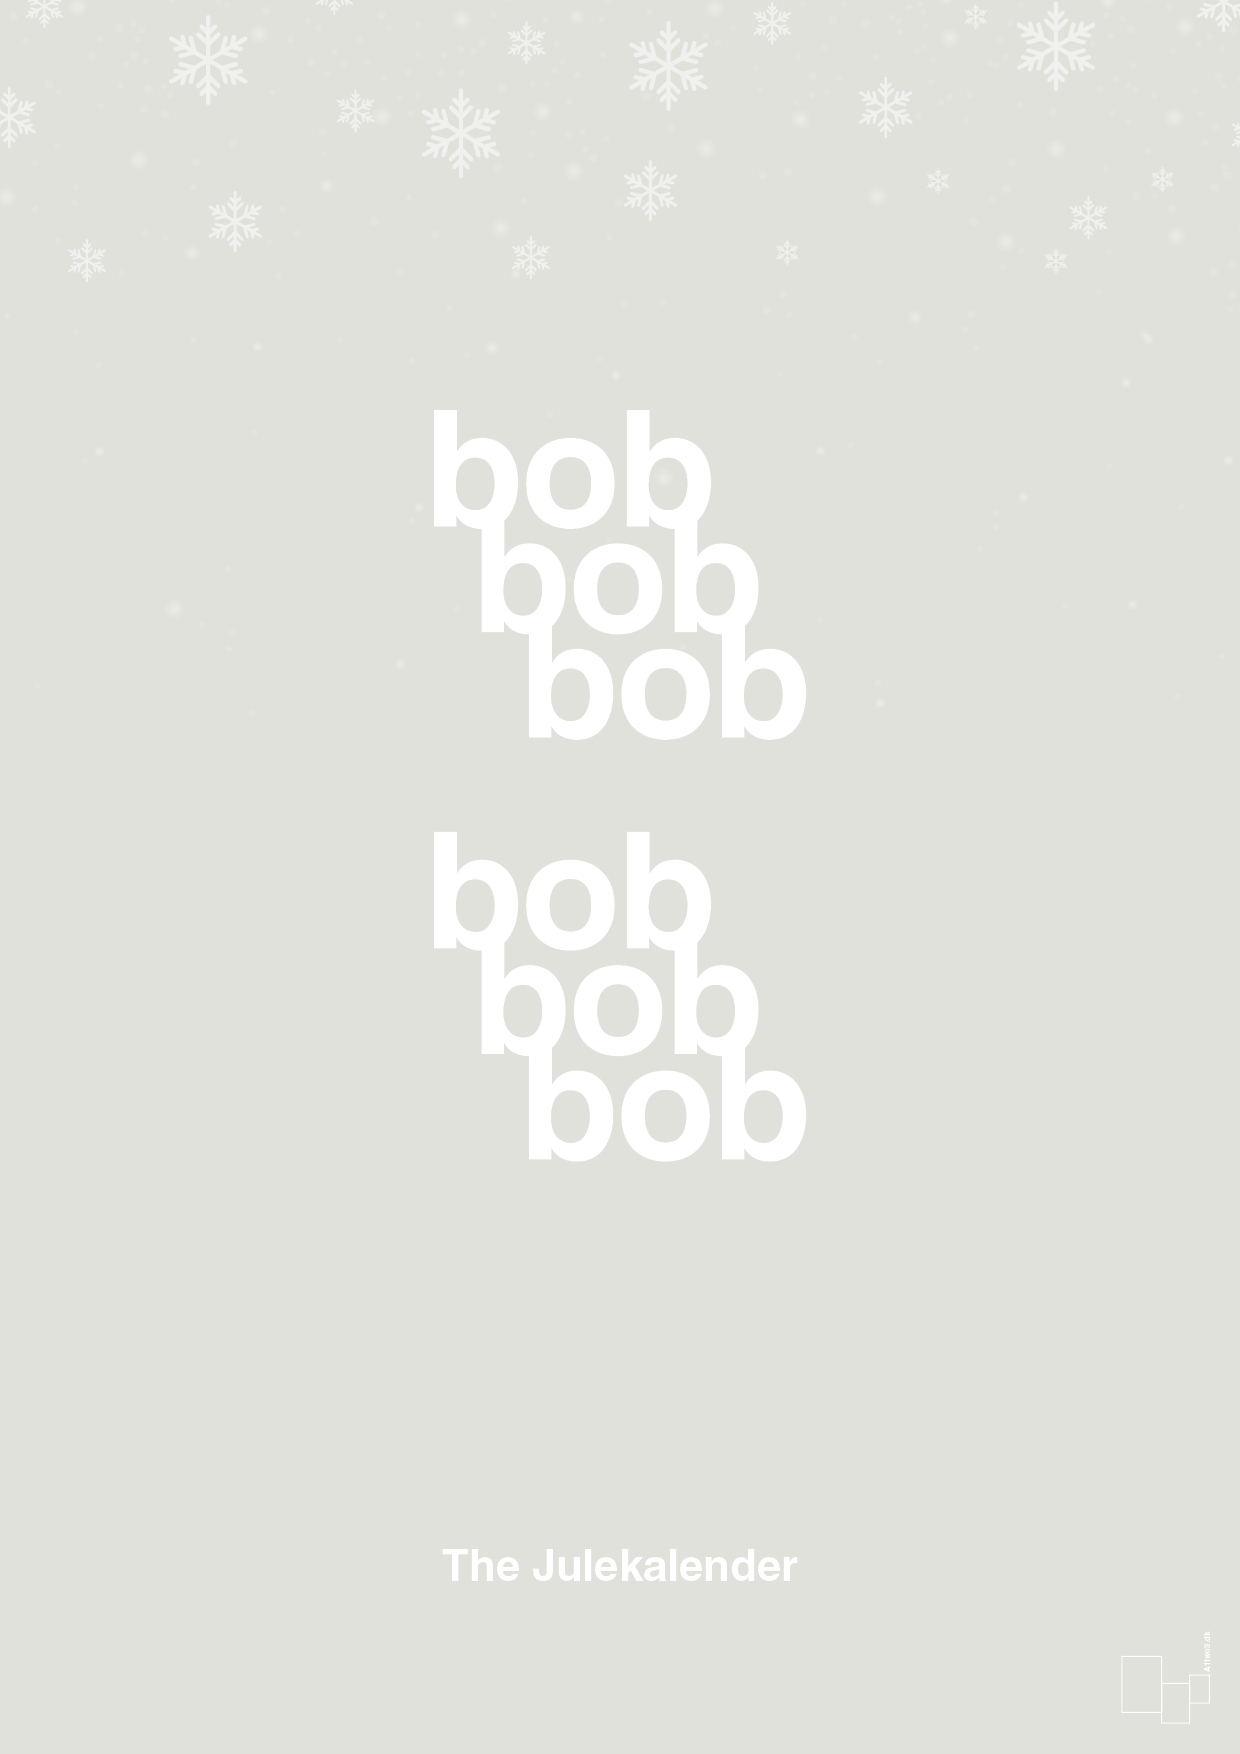 bob bob bob - Plakat med Begivenheder i Painters White